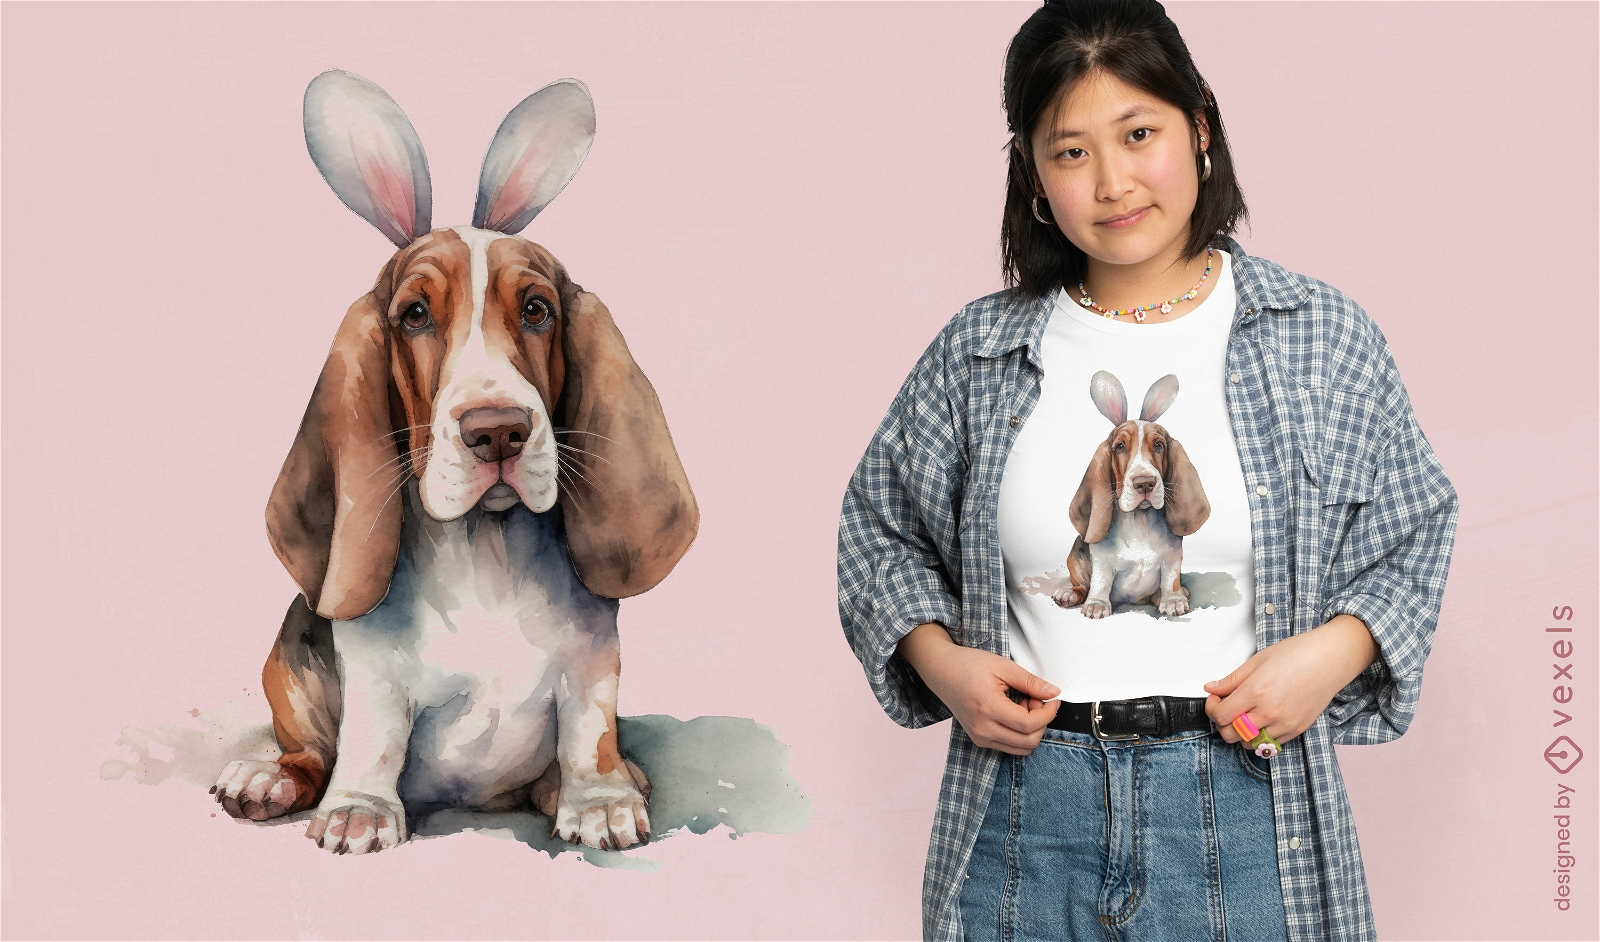 Dise?o de camiseta Easter Basset Hound con orejas de conejo.